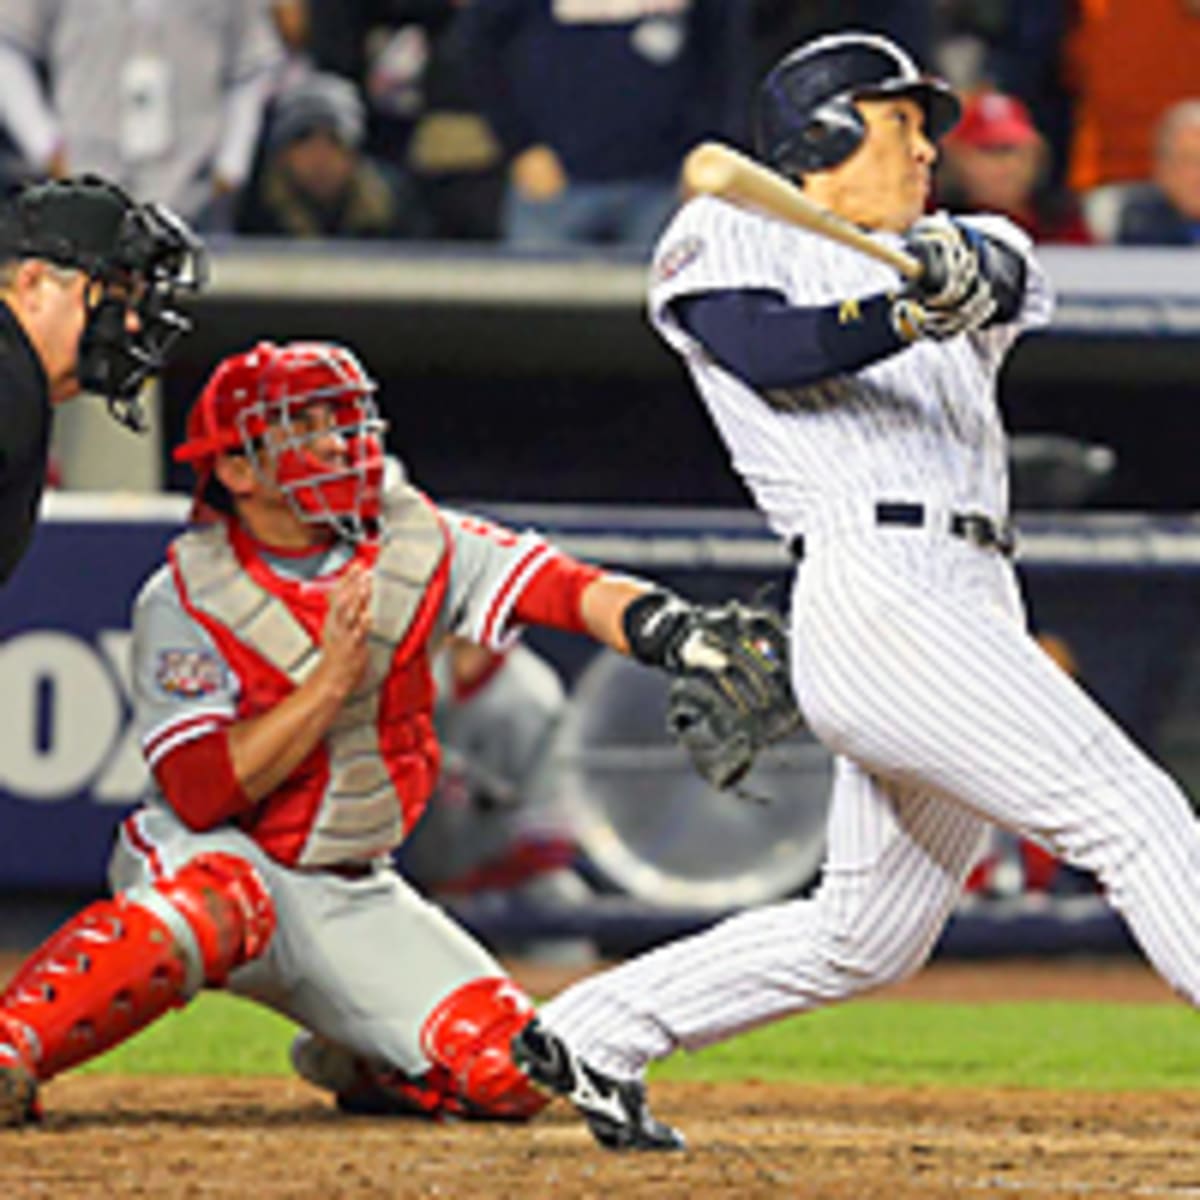 Derek Jeter to join former New York Yankees teammate Hideki Matsui for  charity baseball event in Japan - Sports Illustrated